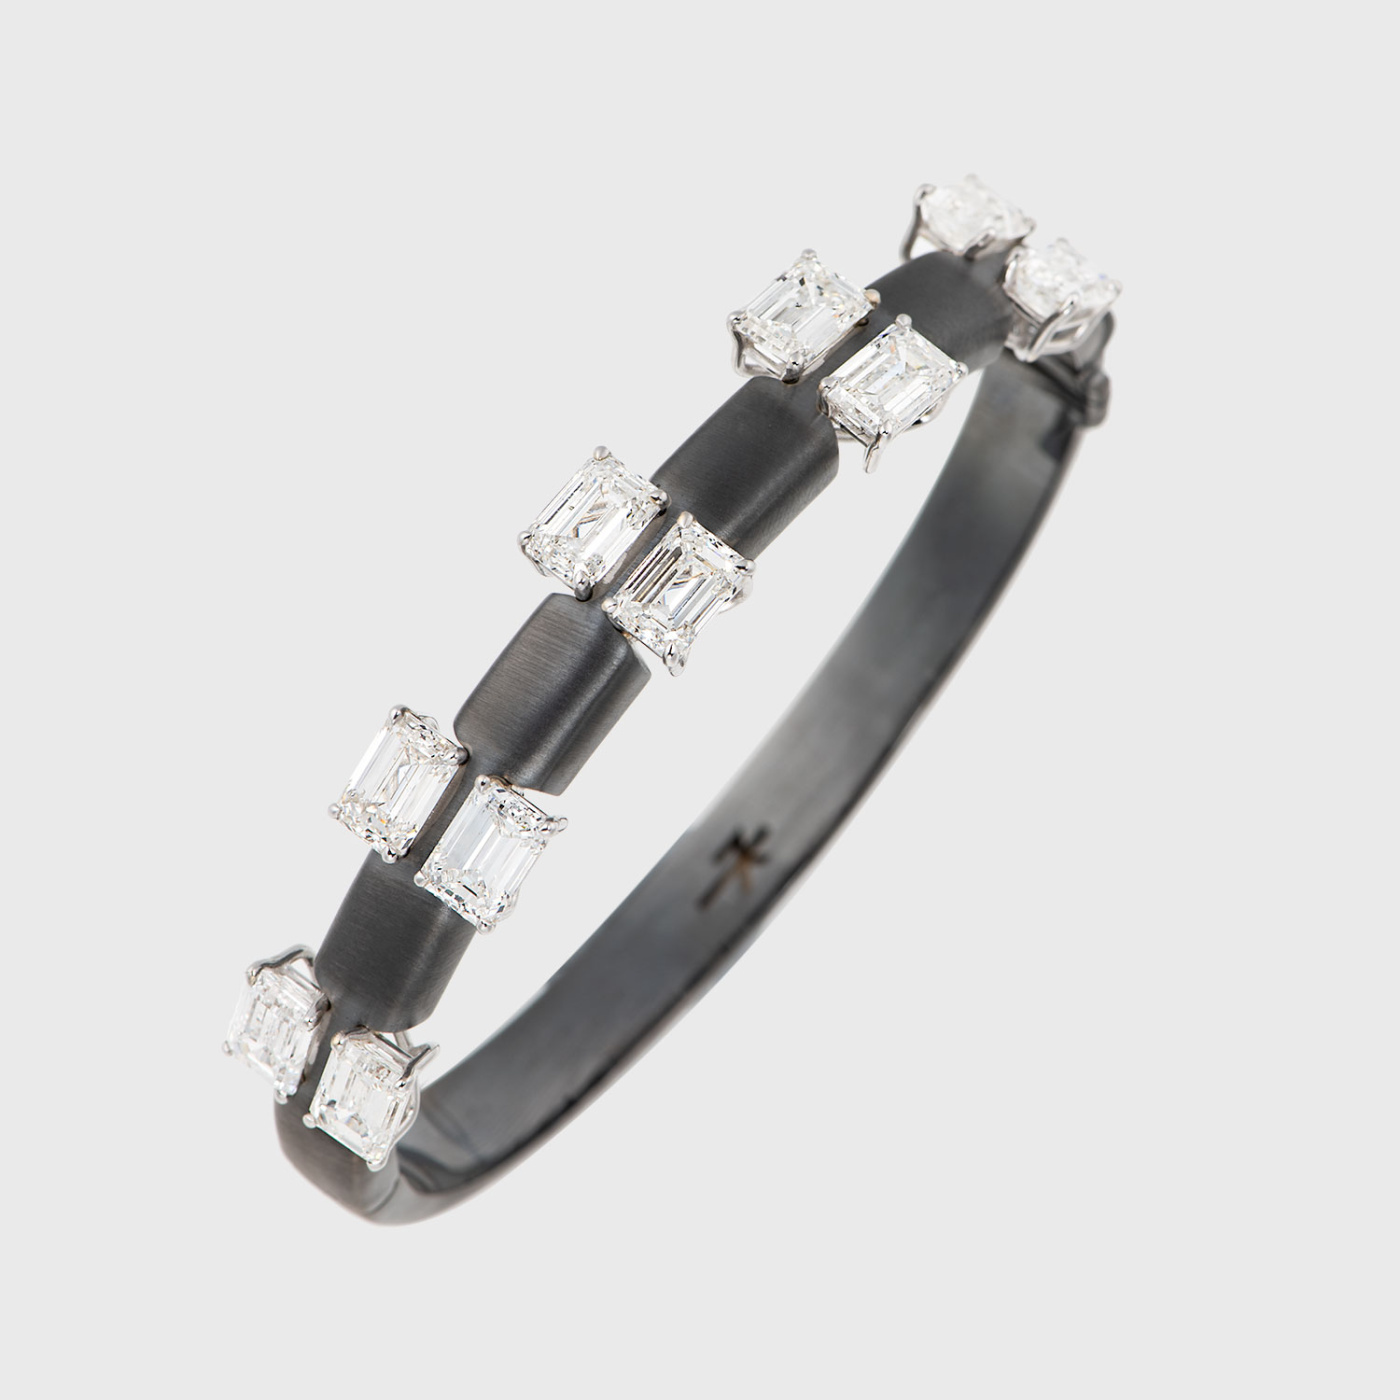 Blackened white gold tennis bracelet with emerald cut white diamonds